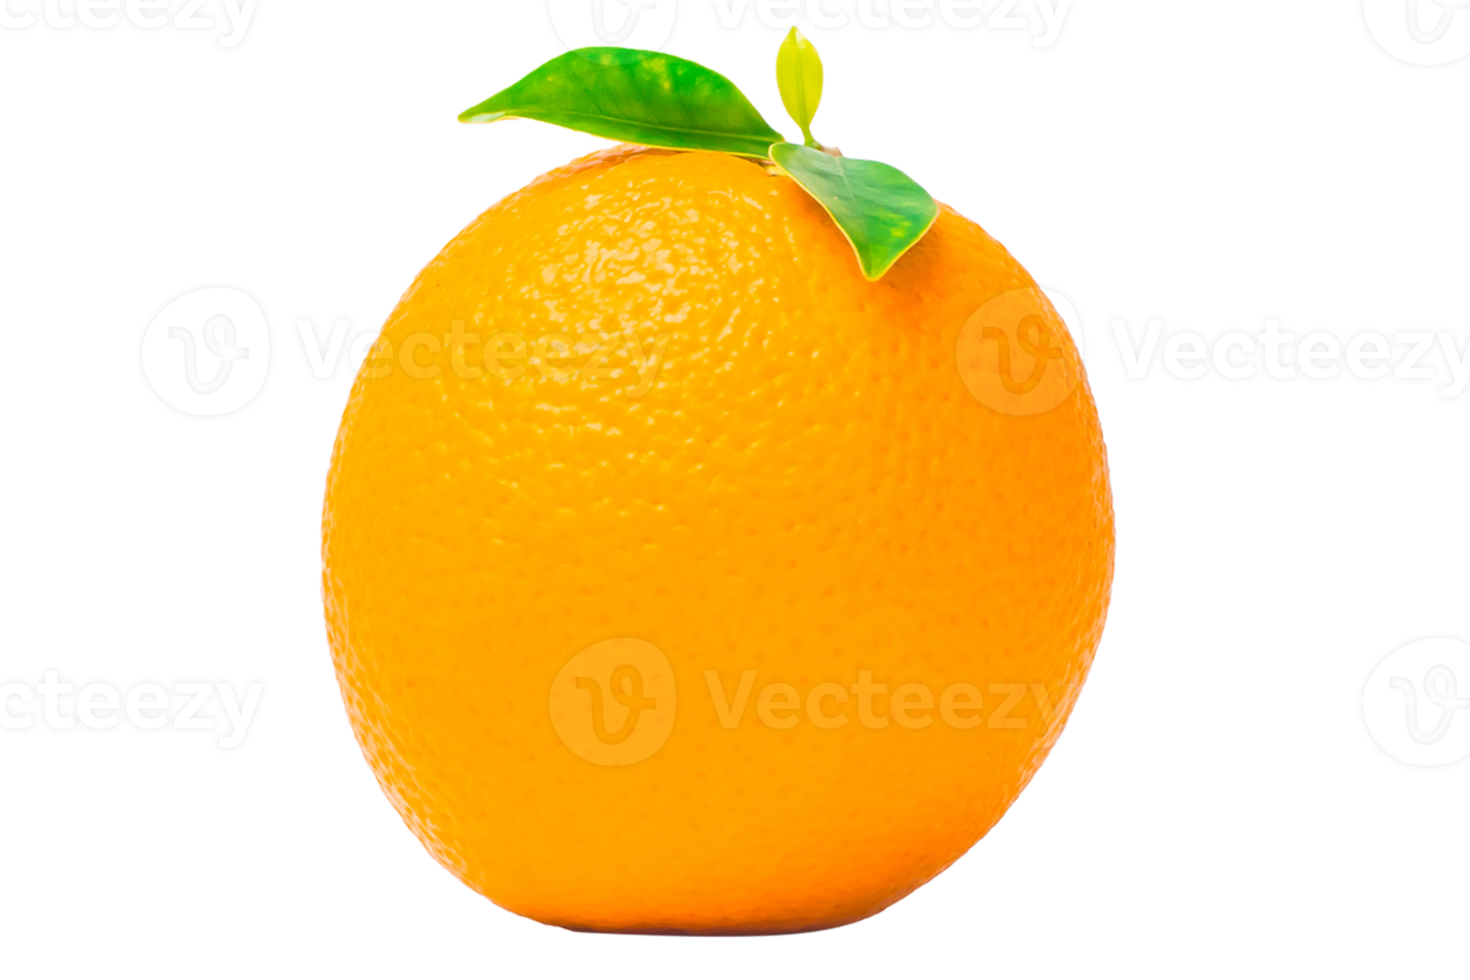 fruta laranja em fundo branco png